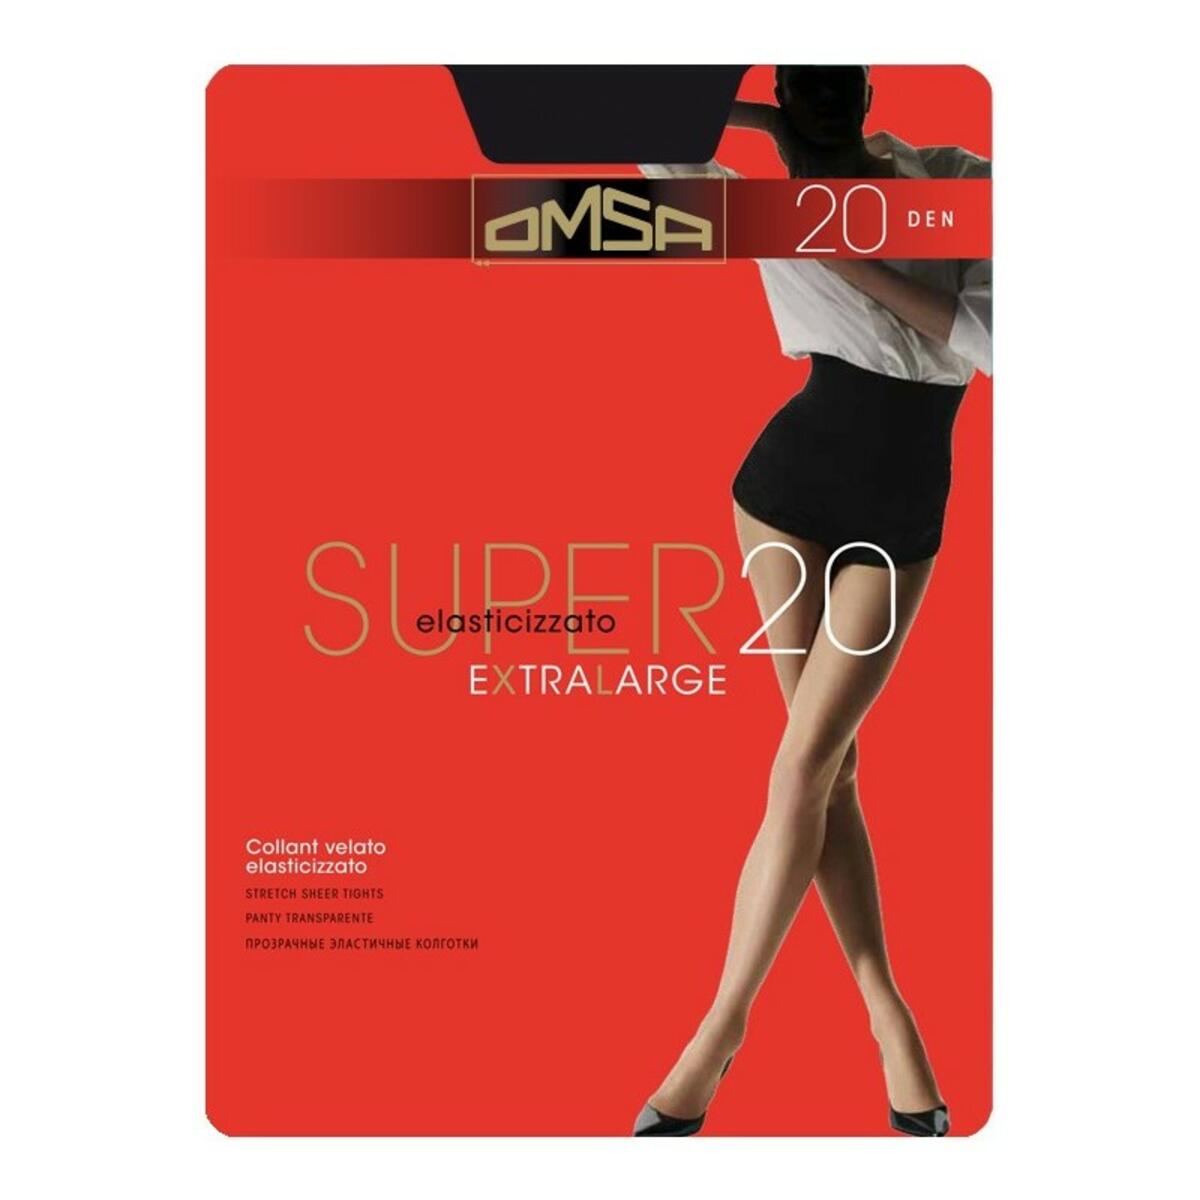 Omsa Super 20 women's stretch tights - CIAM